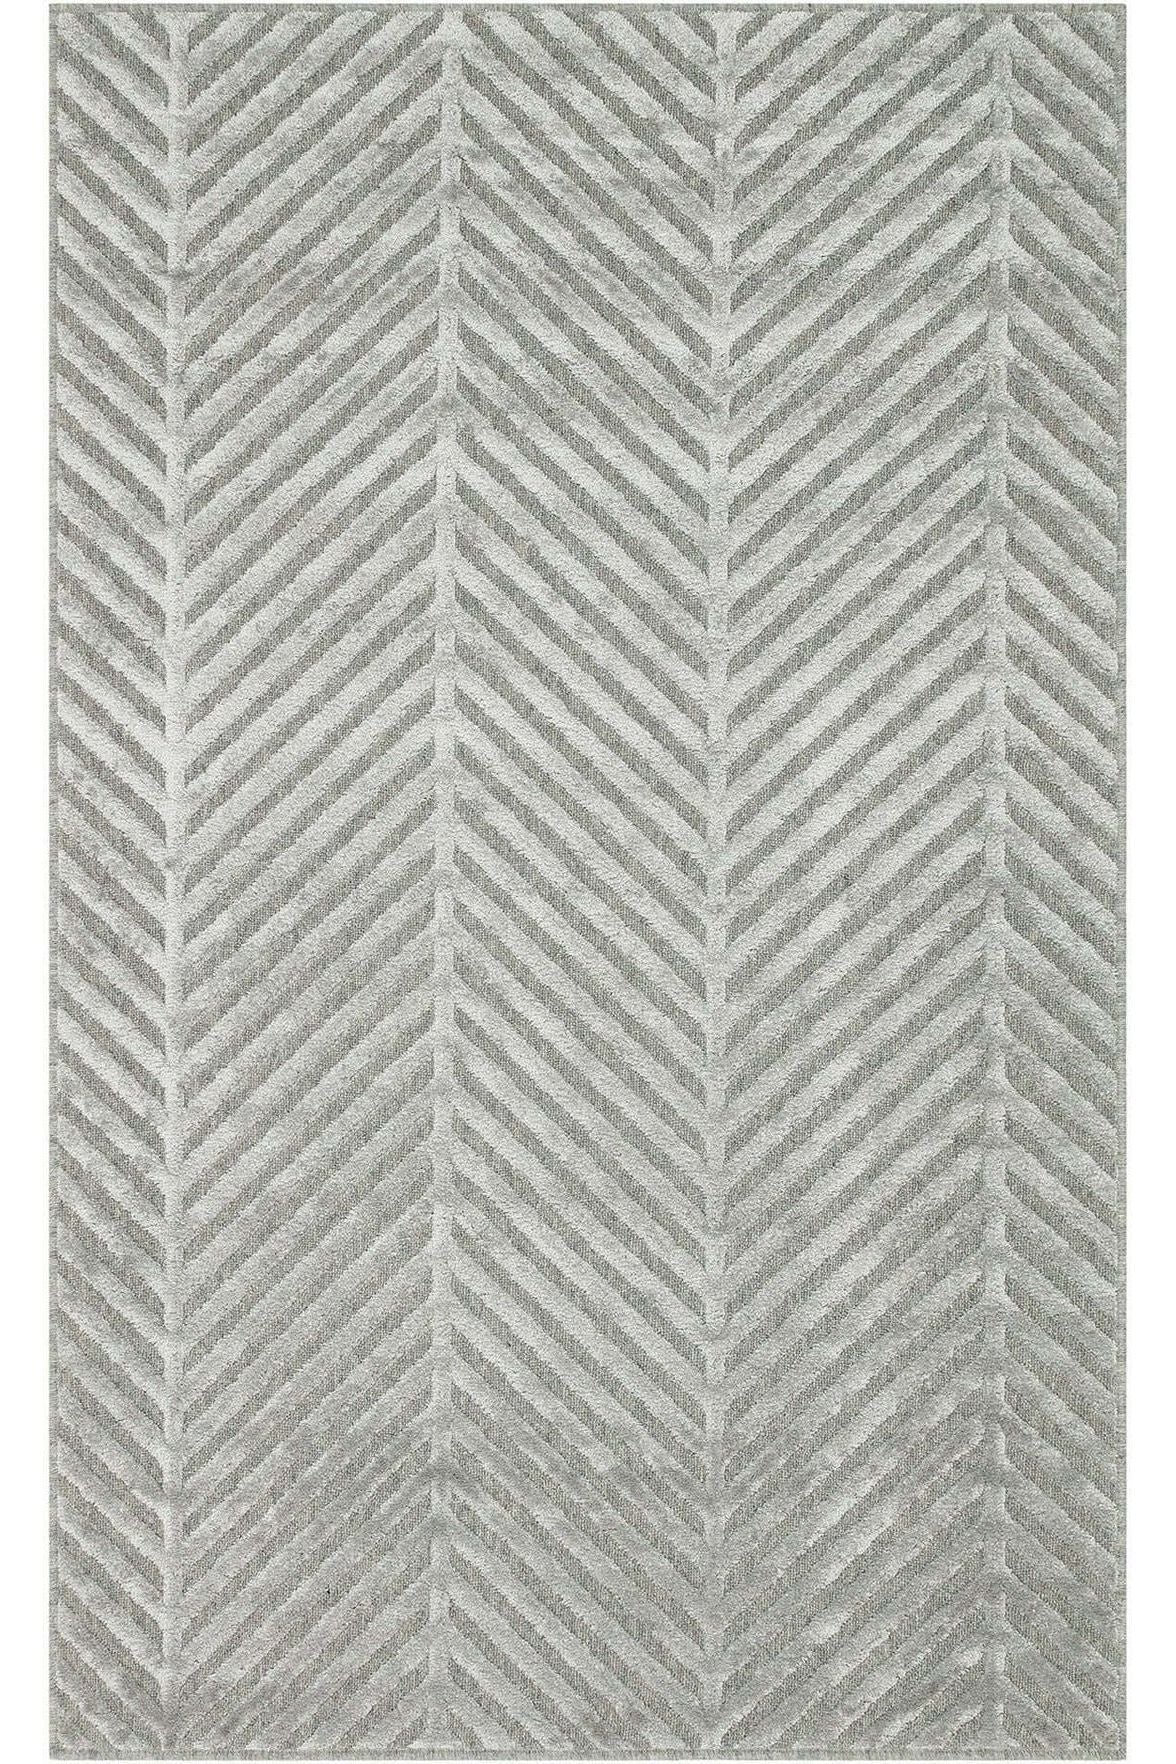 #Turkish_Carpets_Rugs# #Modern_Carpets# #Abrash_Carpets#Znt 04 Grey